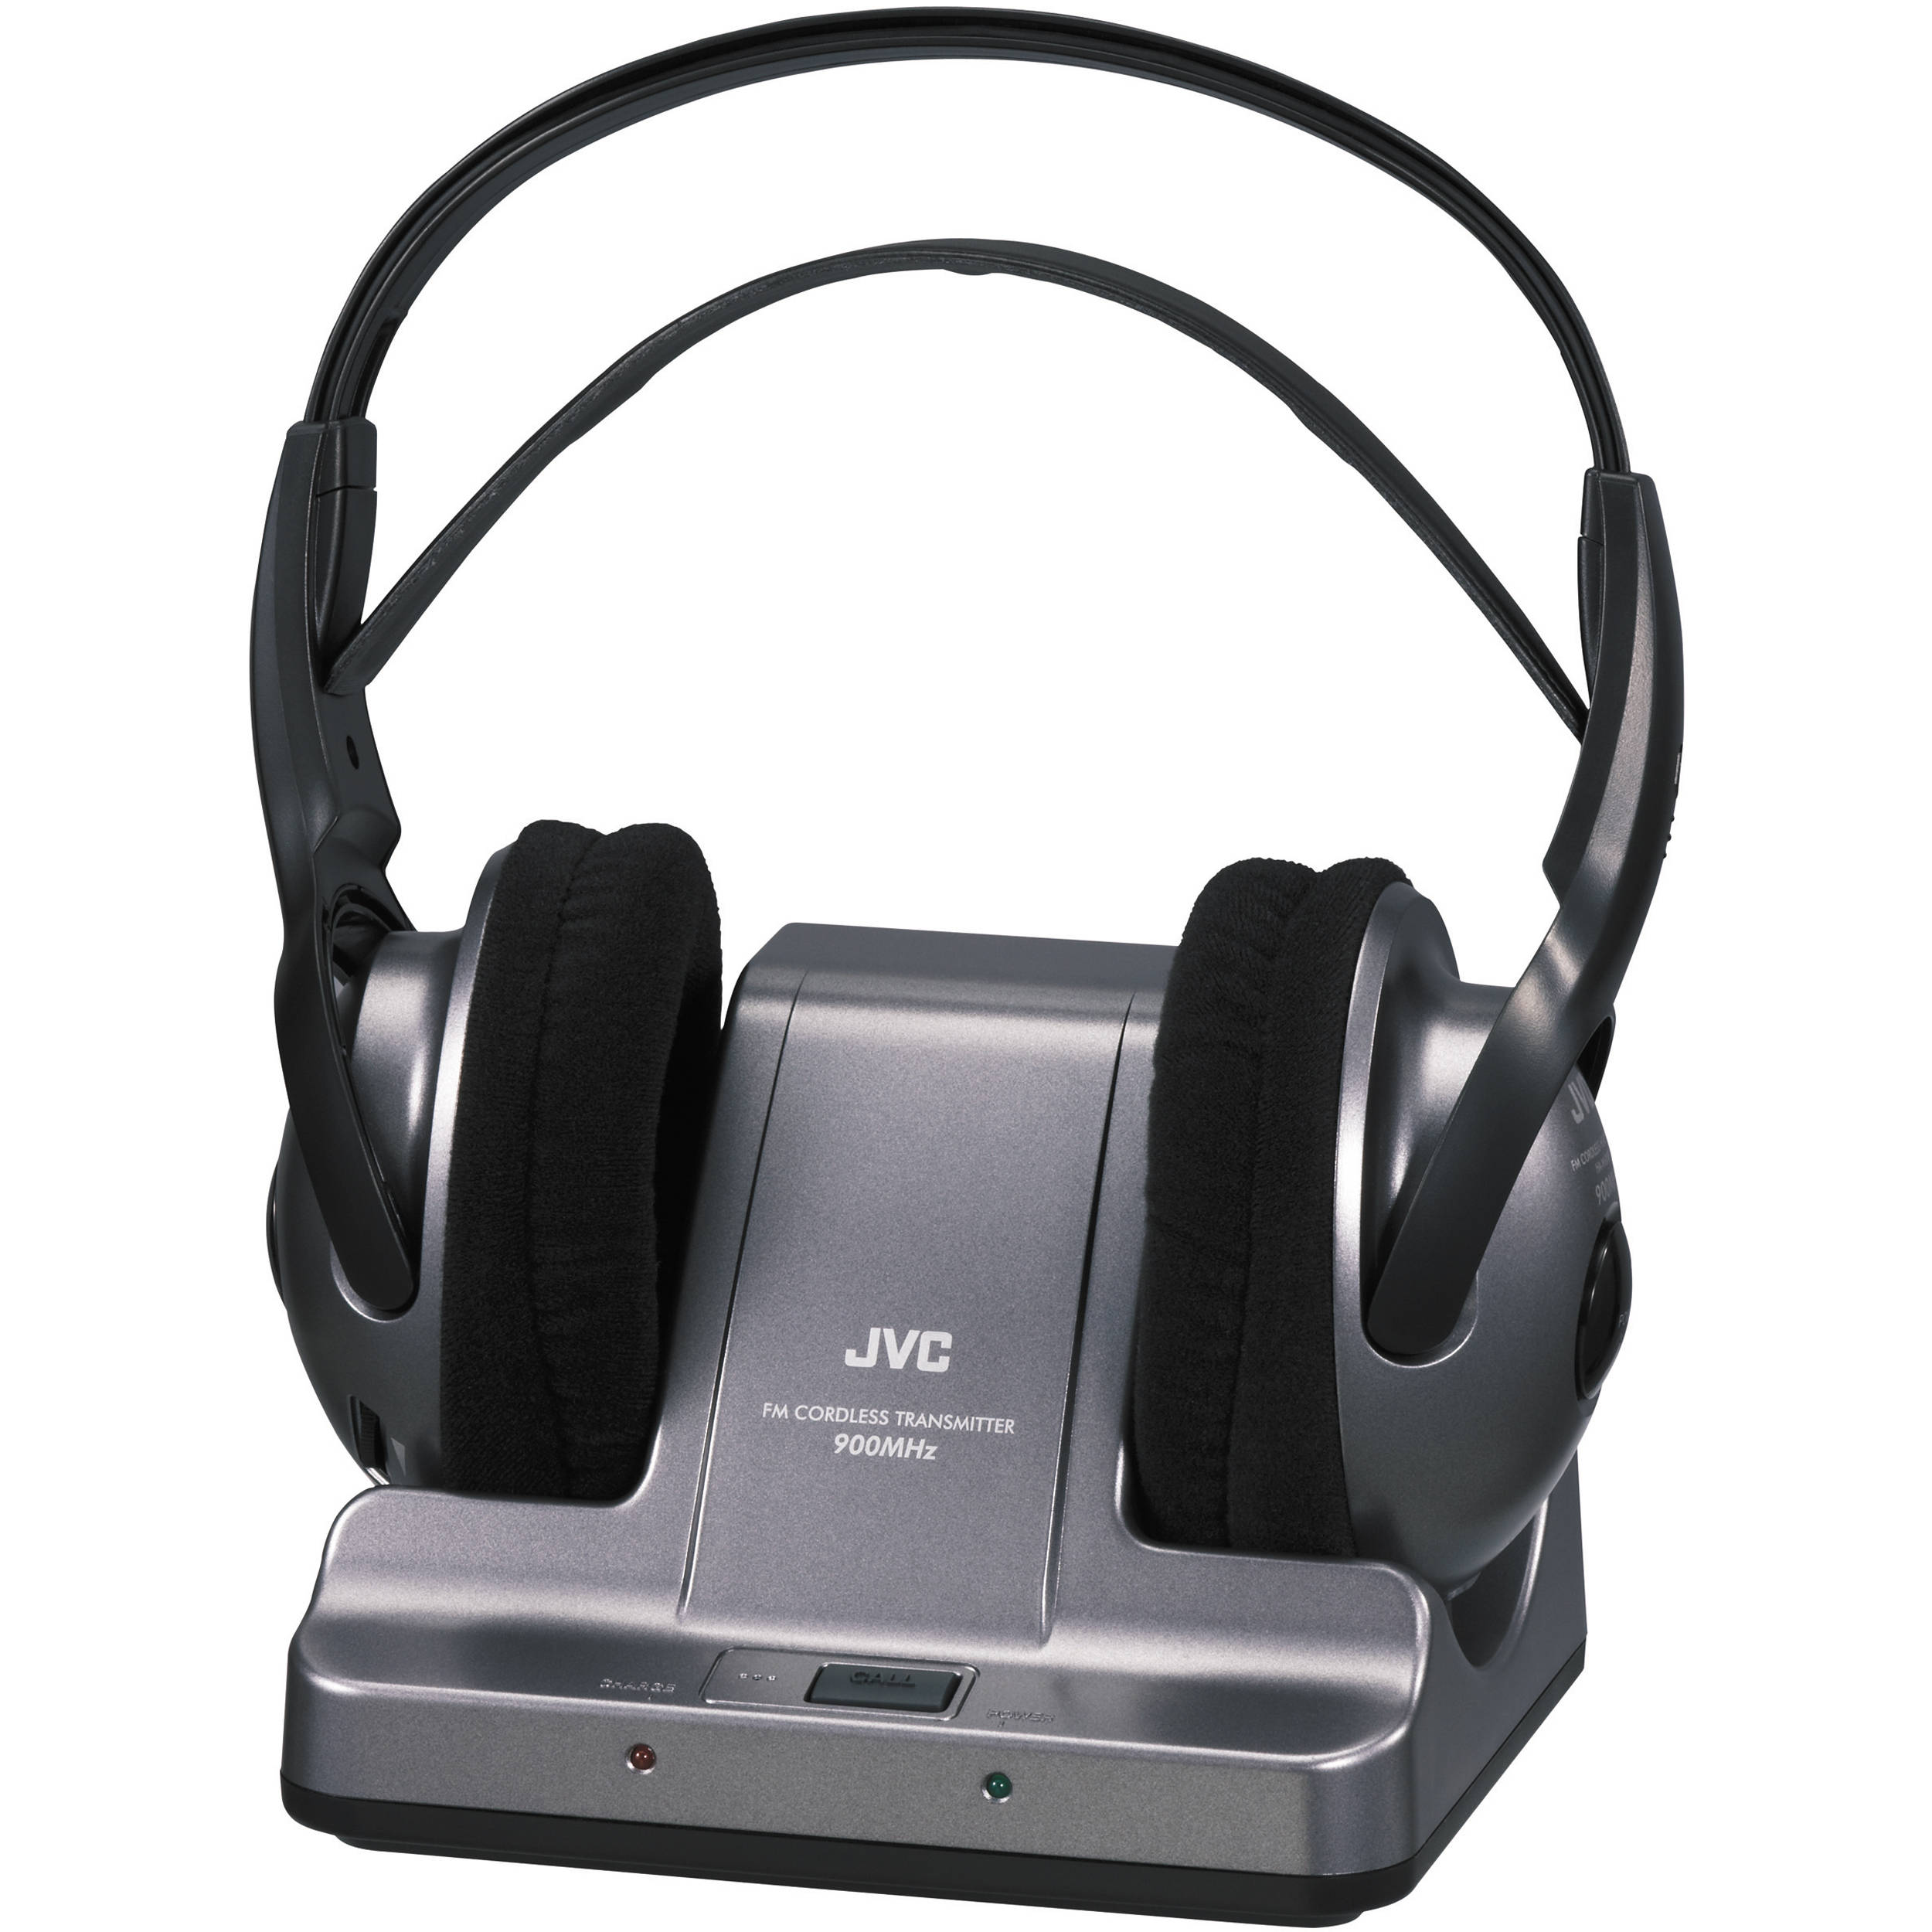 JVC HA-W600RF FM Cordless Headphones